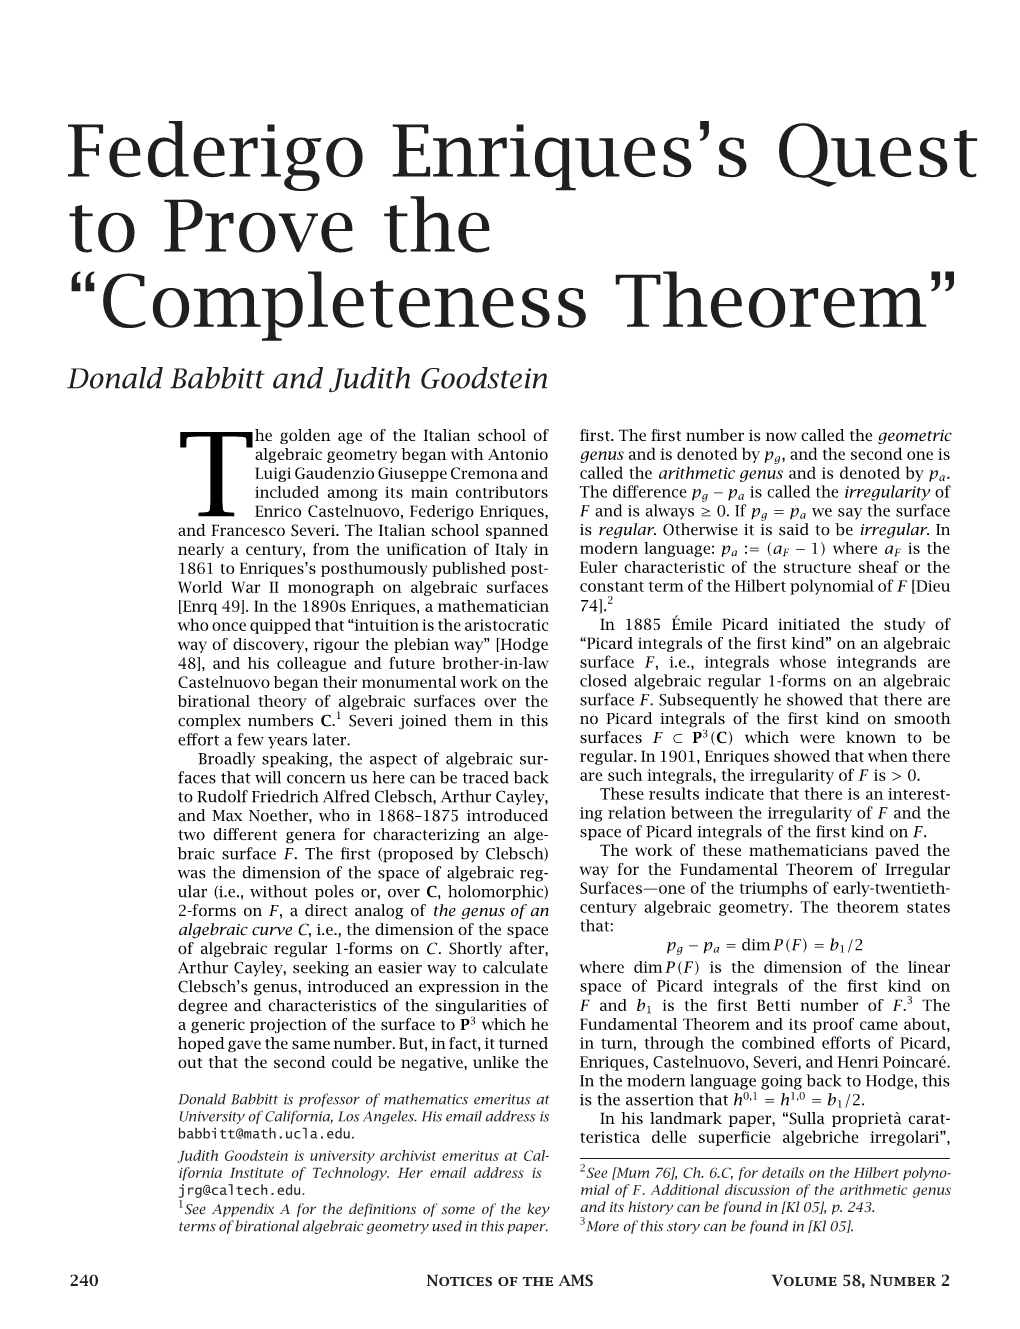 Completeness Theorem” Donald Babbitt and Judith Goodstein